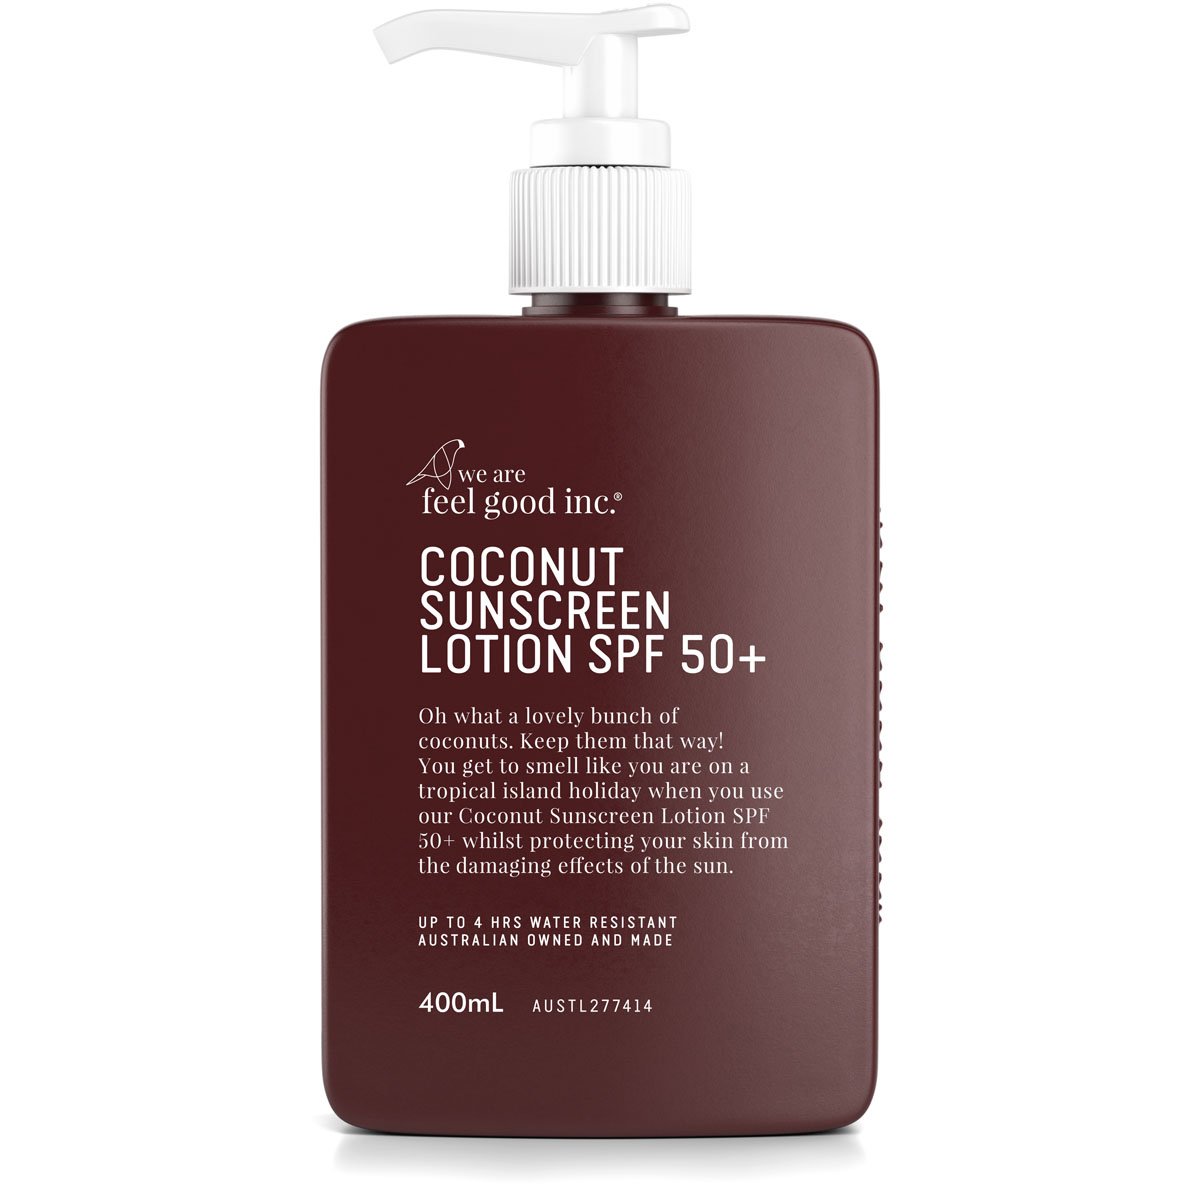 Coconut Sunscreen SPF 50+ - We Are Feel Good Inc.